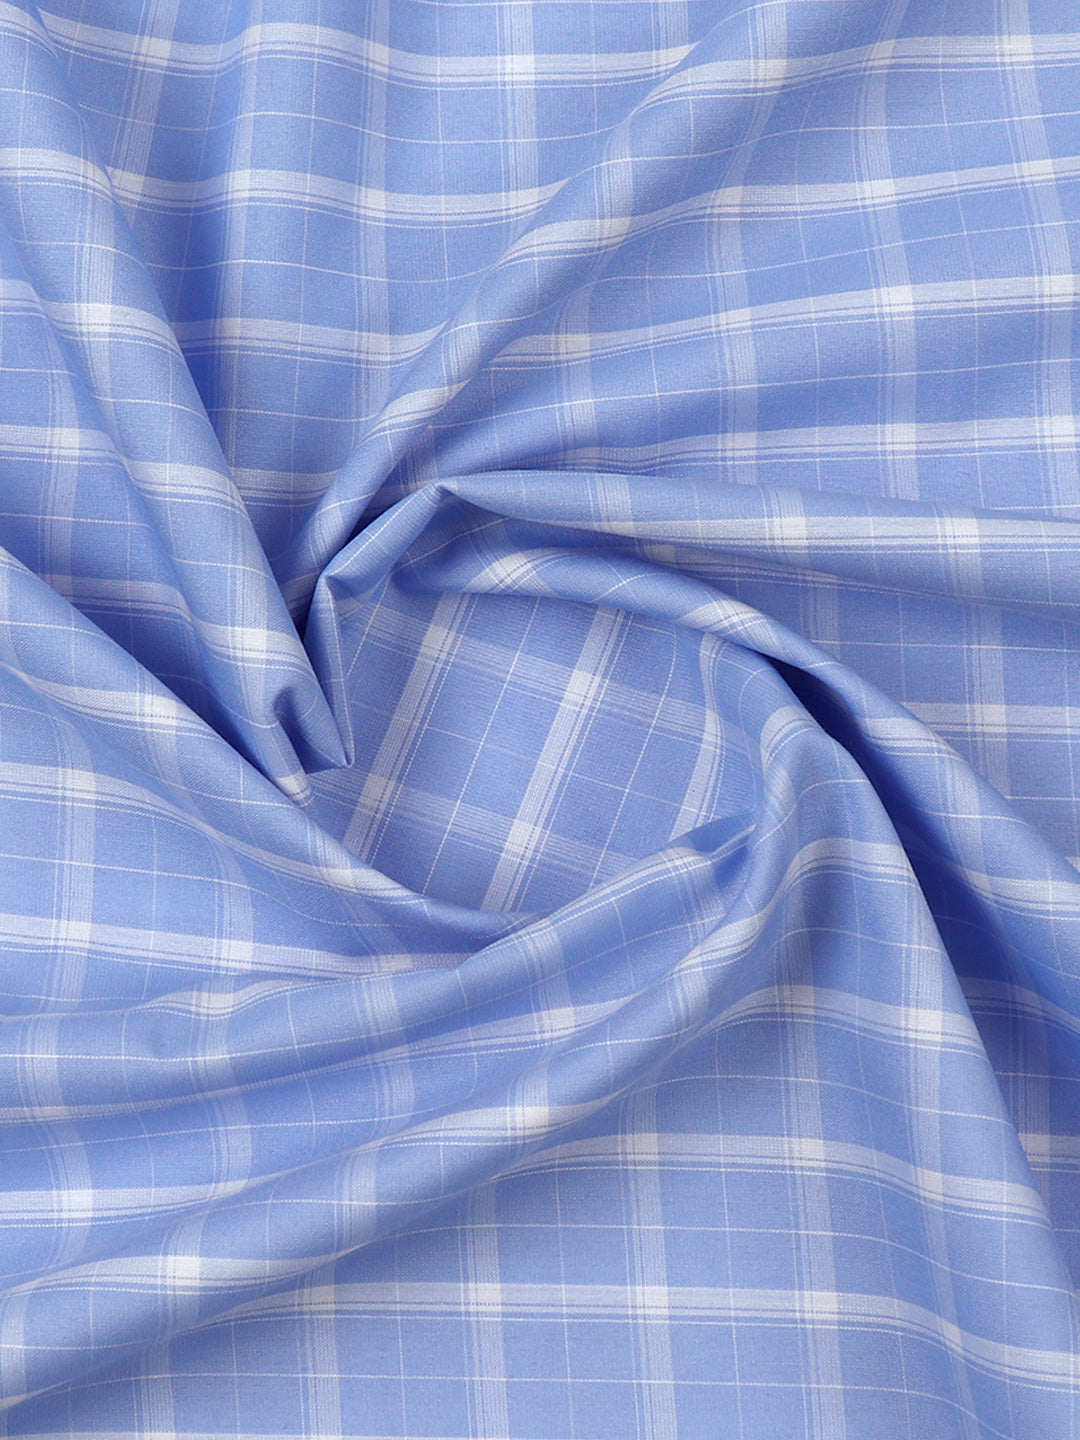 Cotton Light Blue Check Shirt Fabric High Style